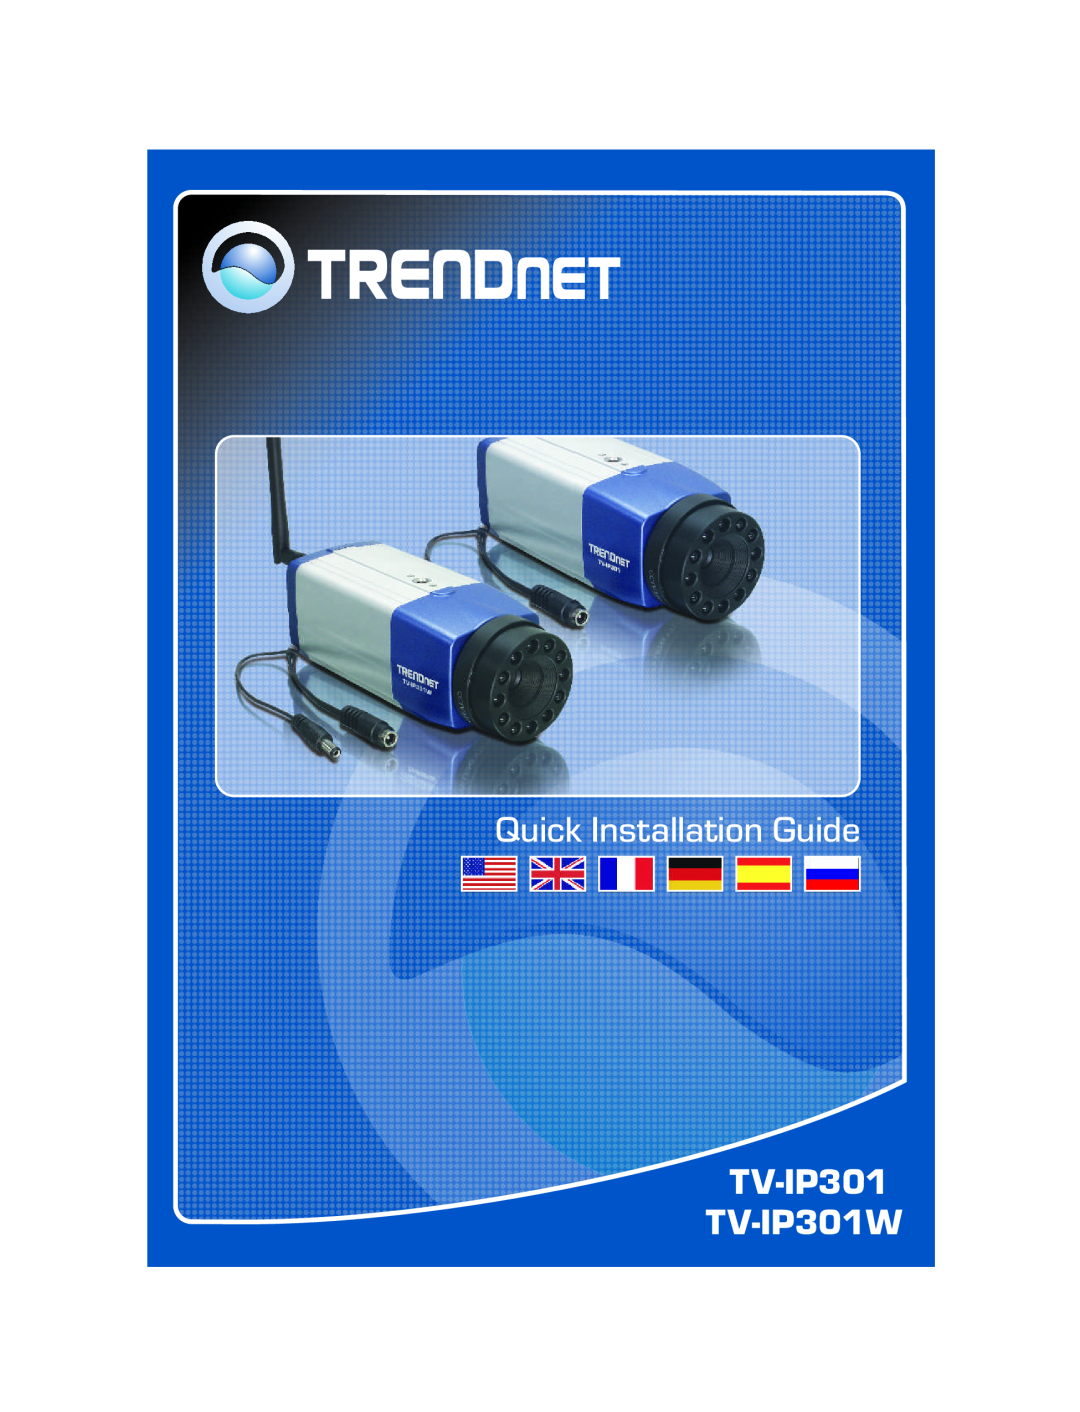 TRENDnet TEW-623PI, TRENDNET manual Quick Installation Guide 